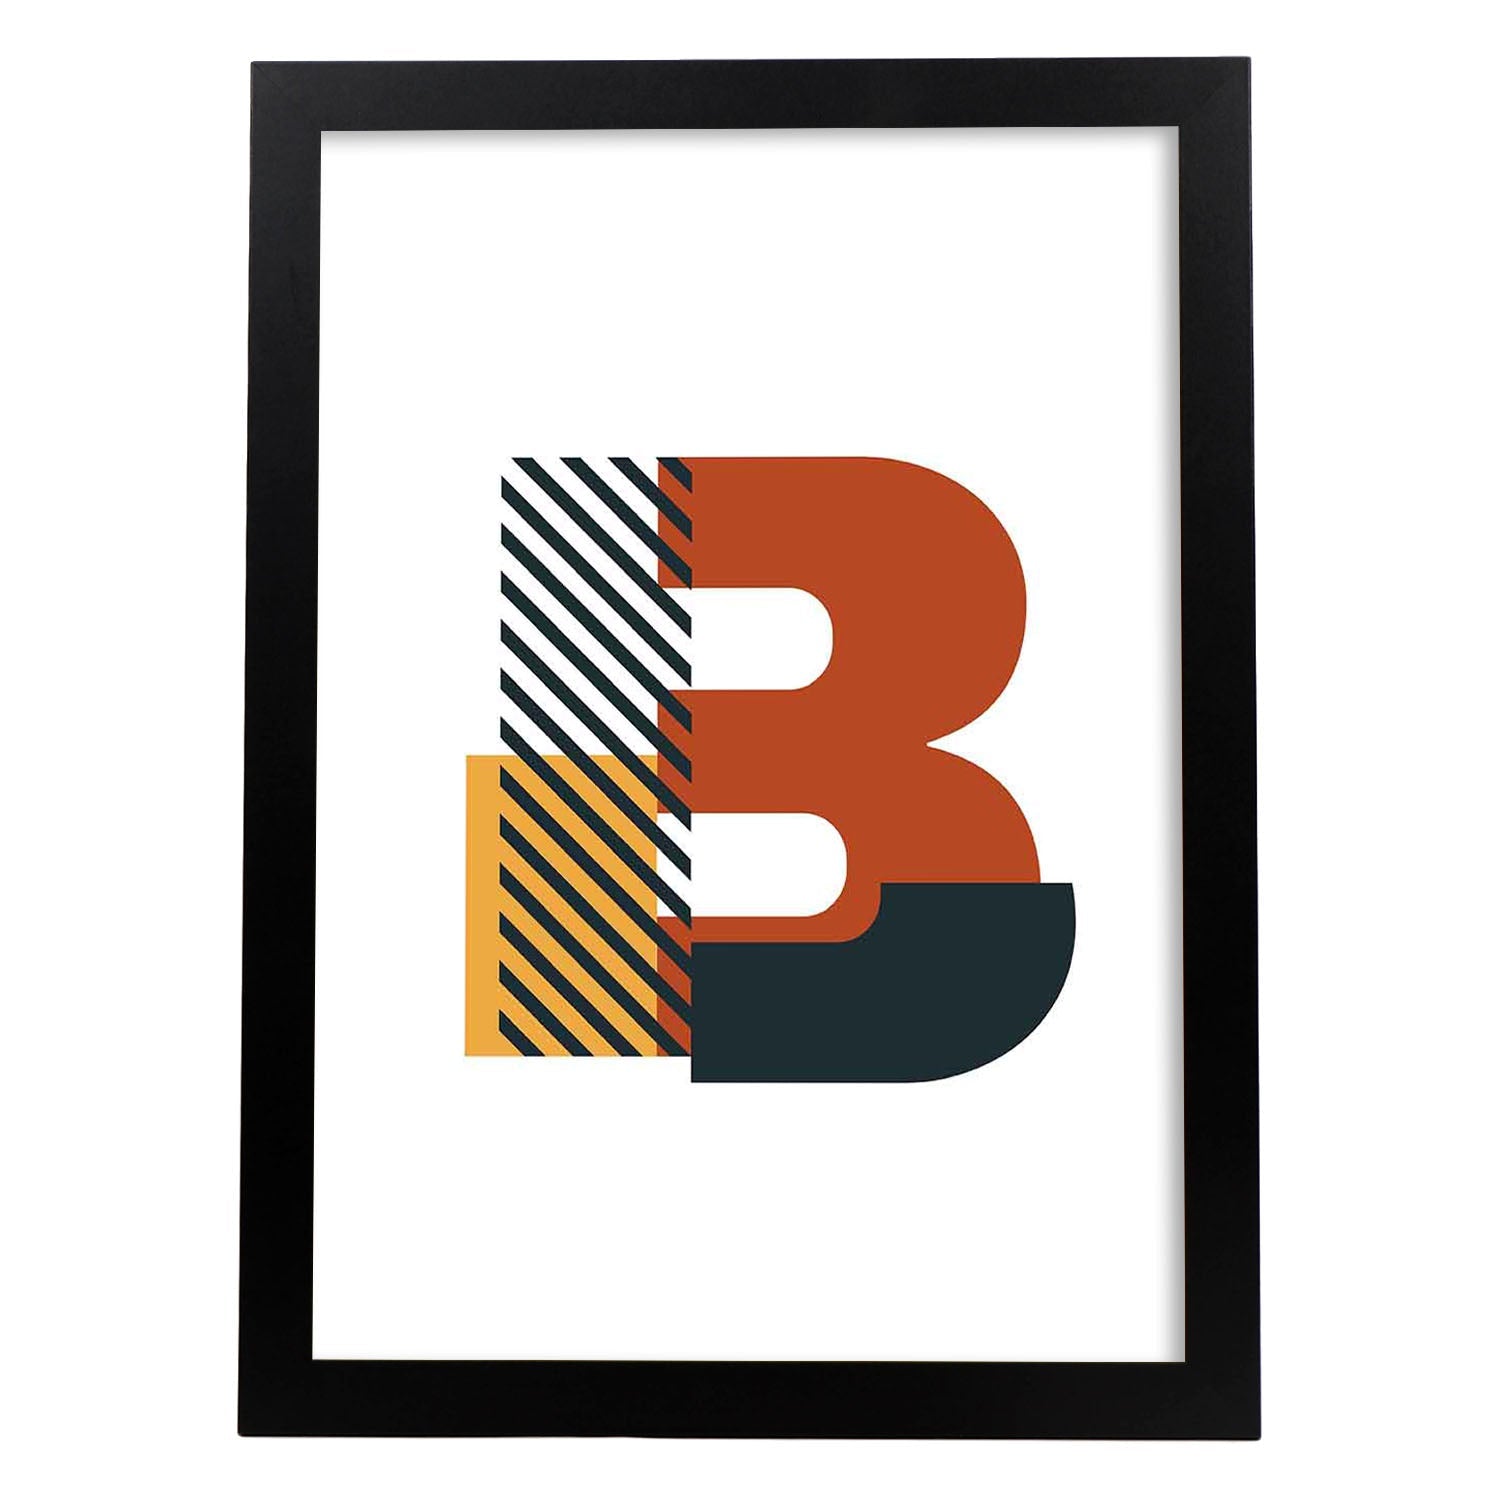 Poster de letra B. Lámina estilo Geometria con imágenes del alfabeto.-Artwork-Nacnic-A3-Marco Negro-Nacnic Estudio SL